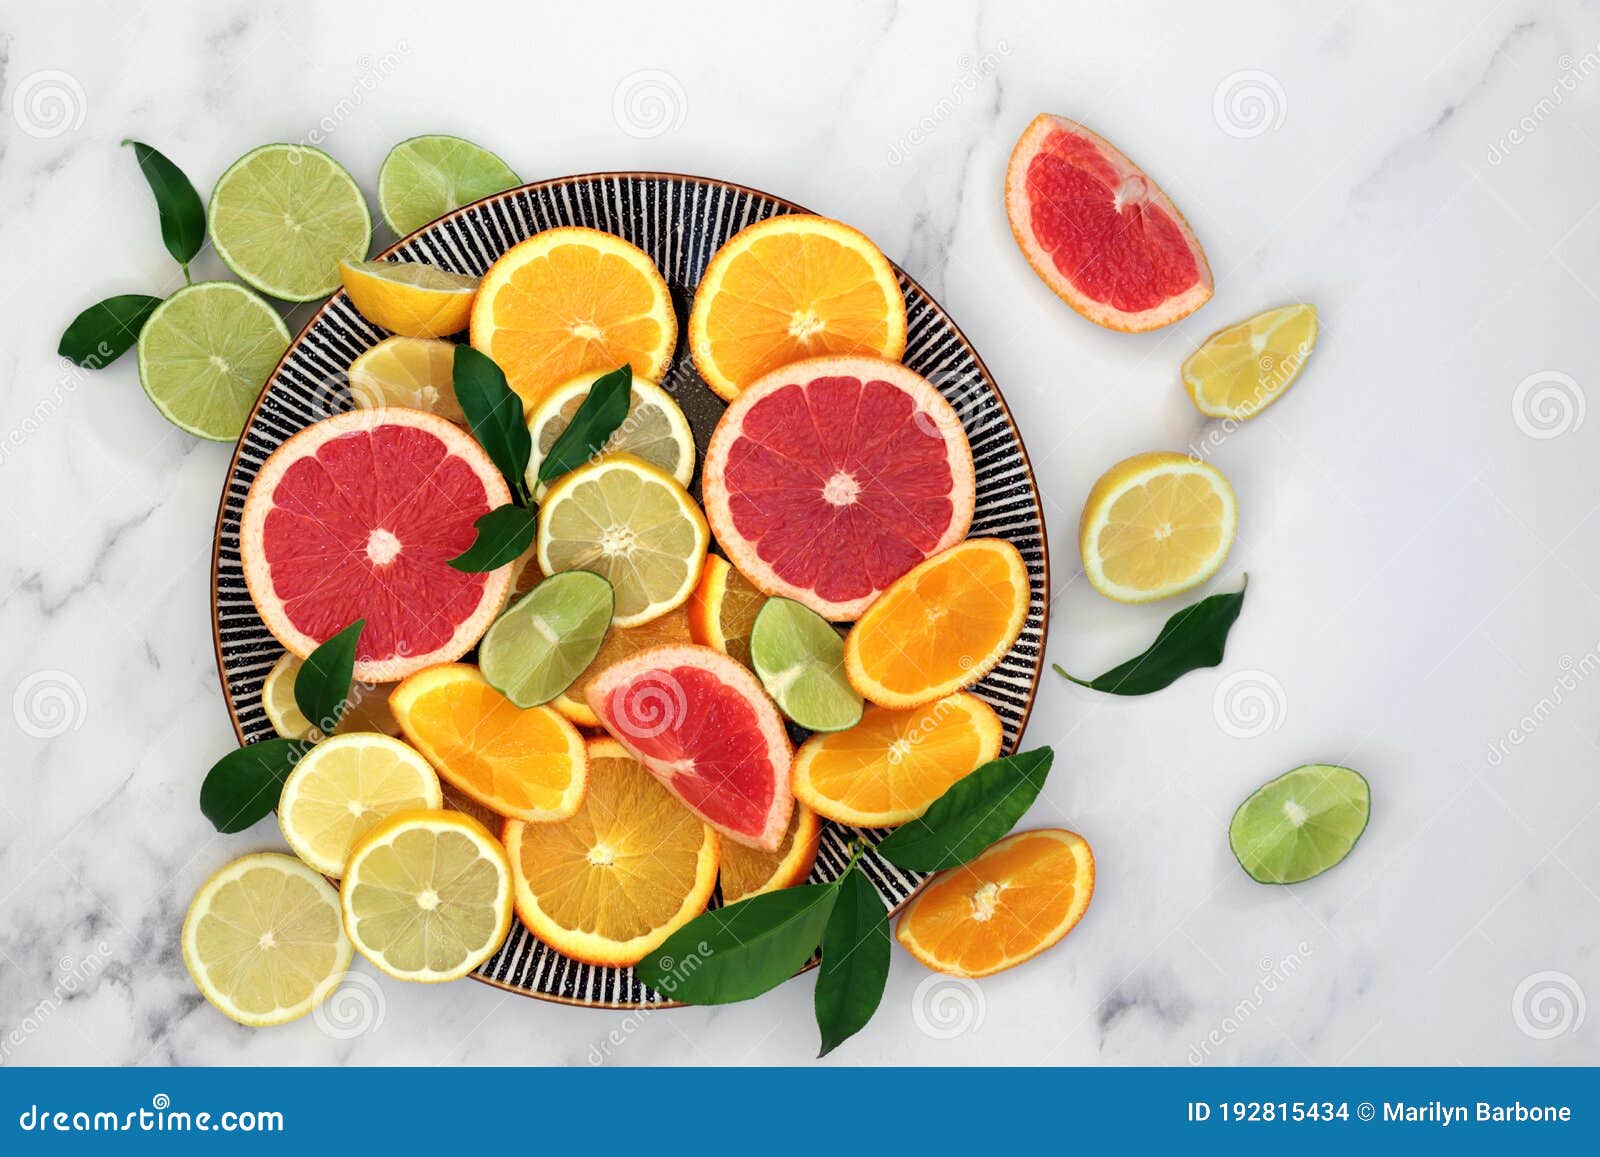 immune boosting citrus fruit health food